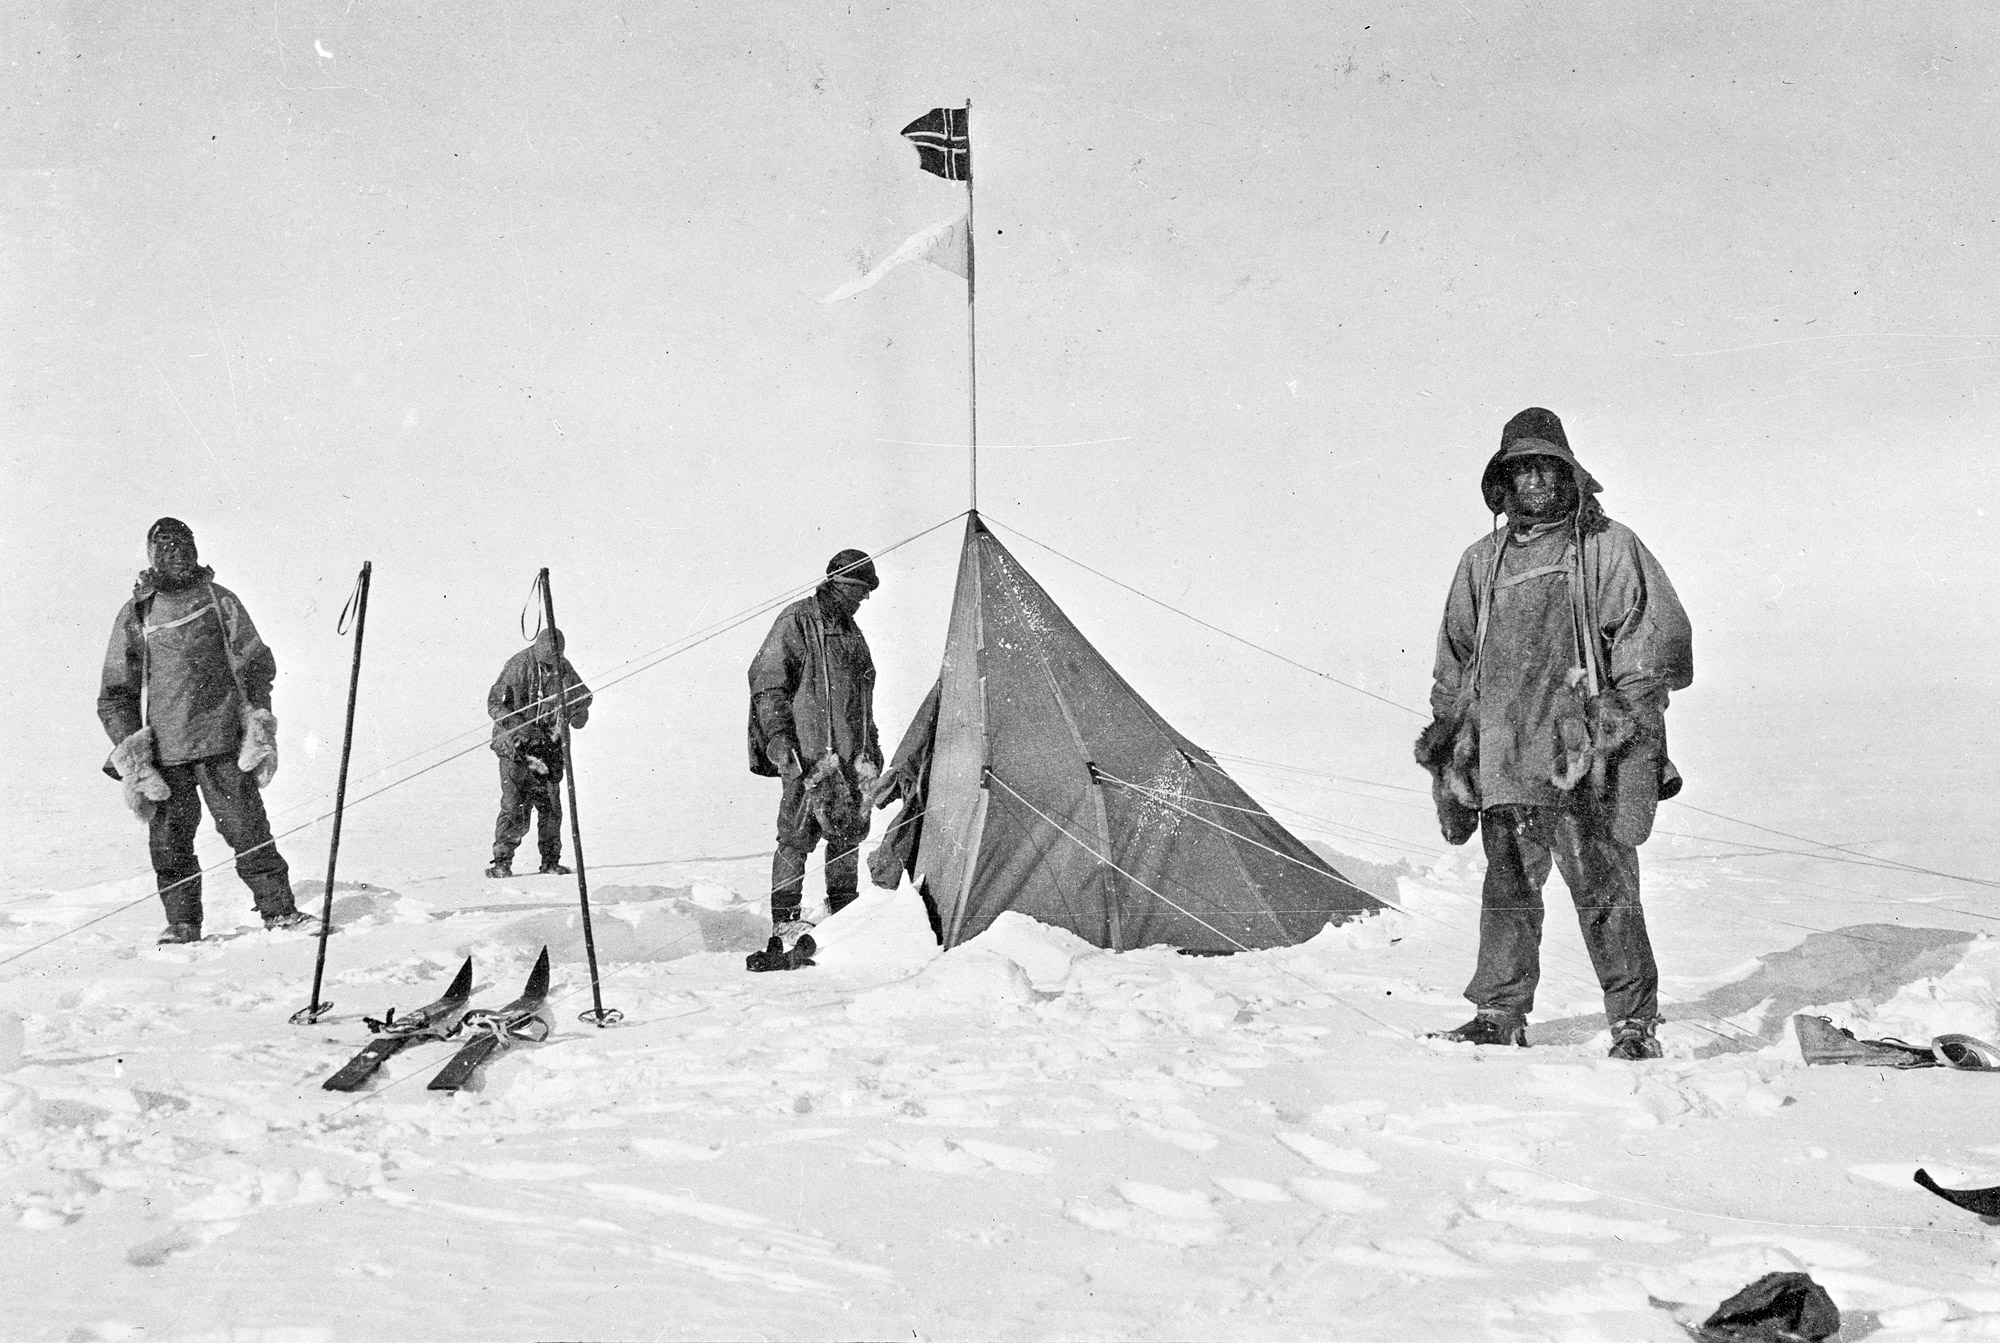 The Race to the South Pole - Roald Amundsen and Robert Scott 1911-1912